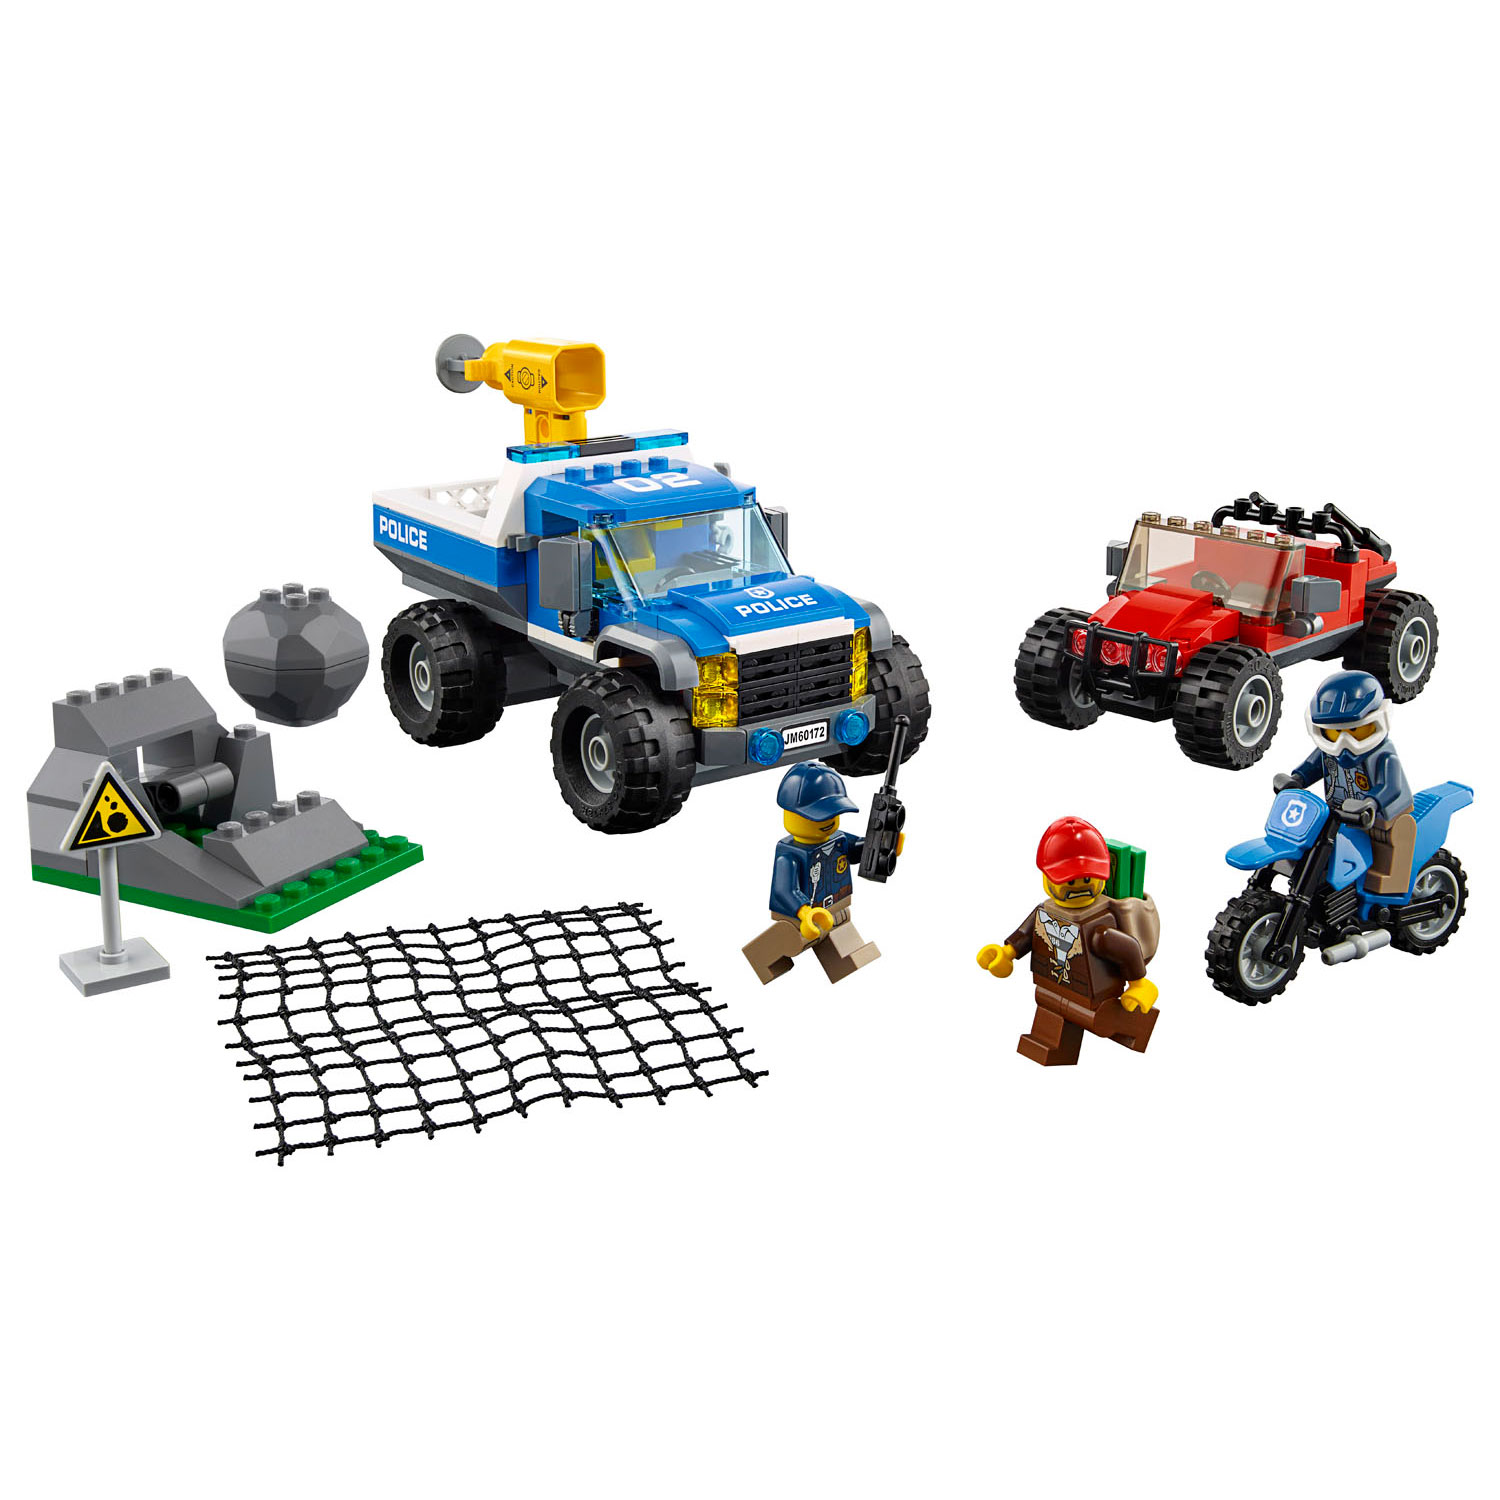 LEGO City 60172 Modderwegachtervolging